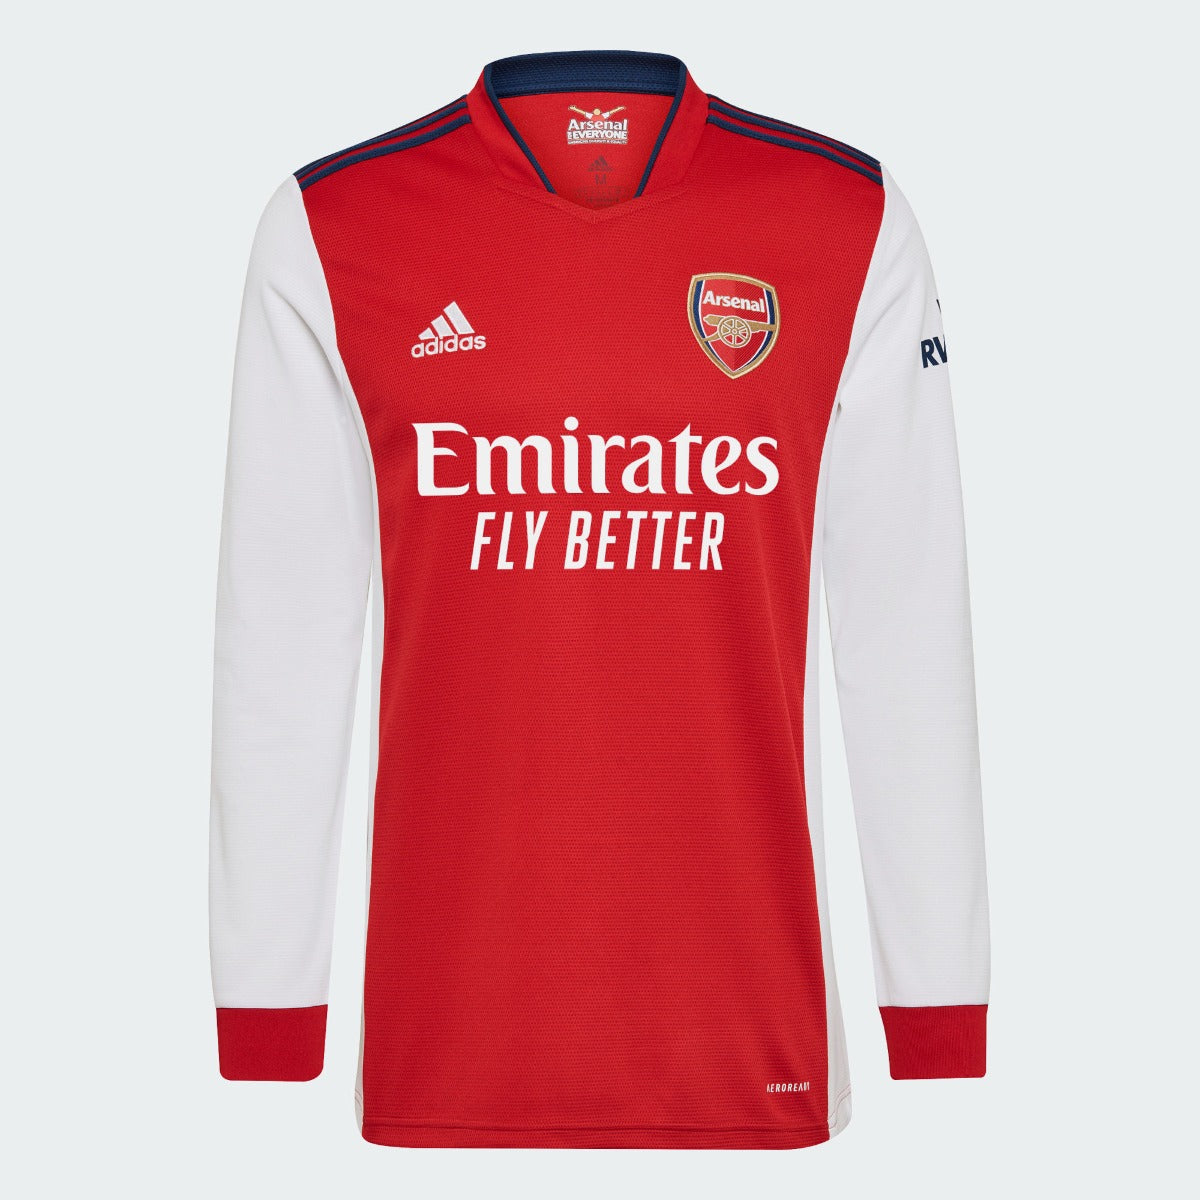 Adidas, Maglia a maniche lunghe Adidas 2021-22 Arsenal Home - Scarlet-Bianco